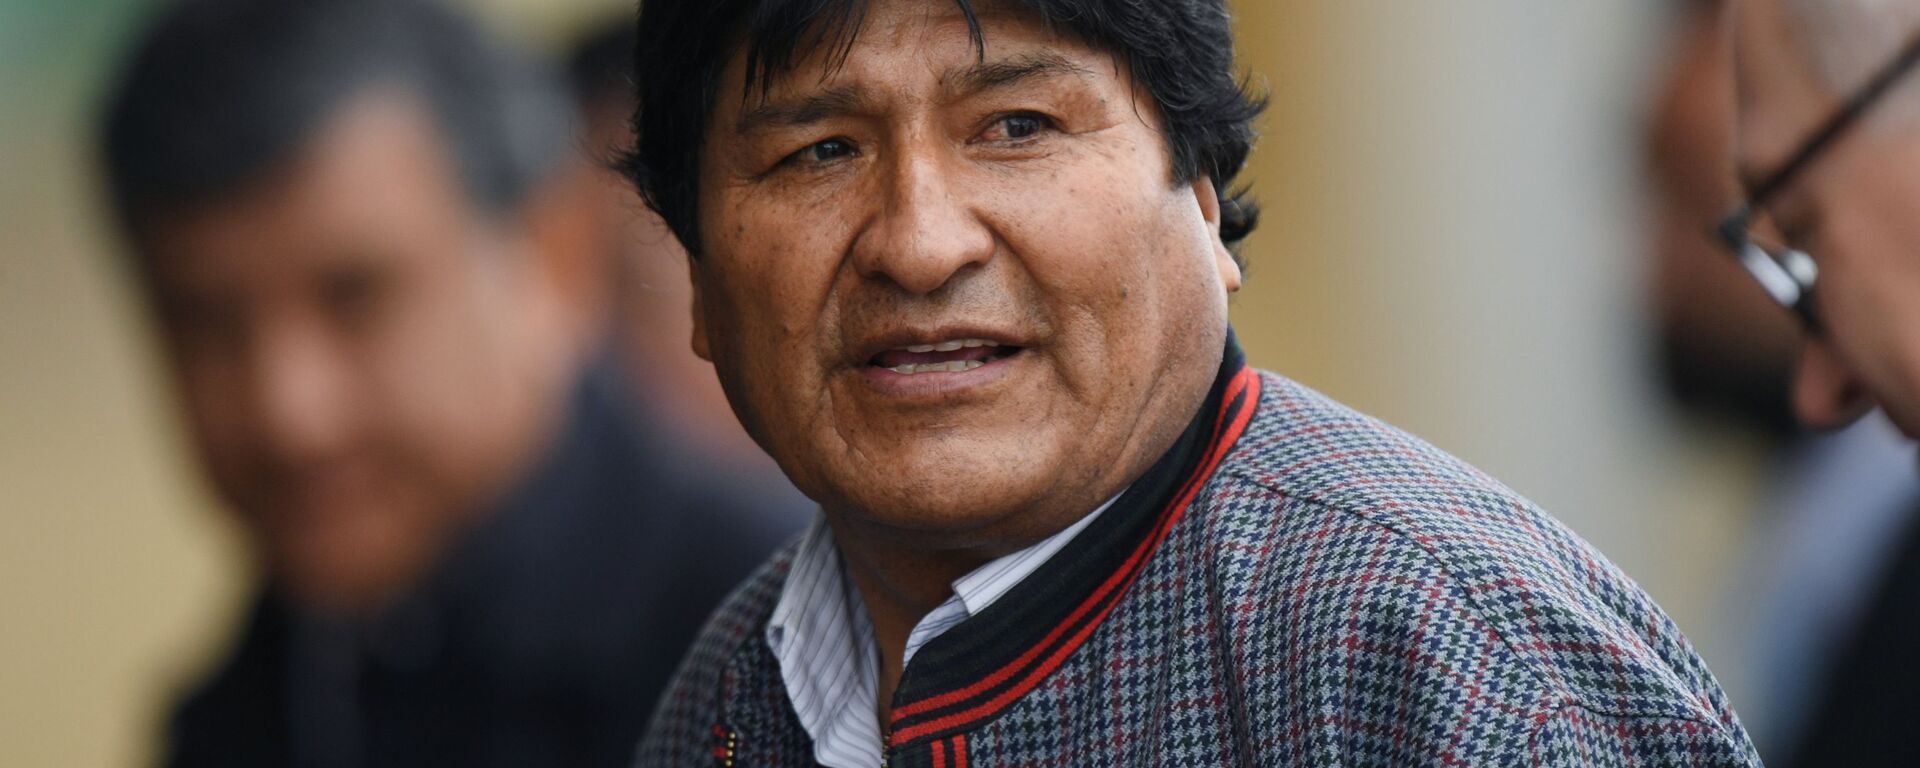 Evo Morales, presidente boliviano  - Sputnik Mundo, 1920, 26.04.2021